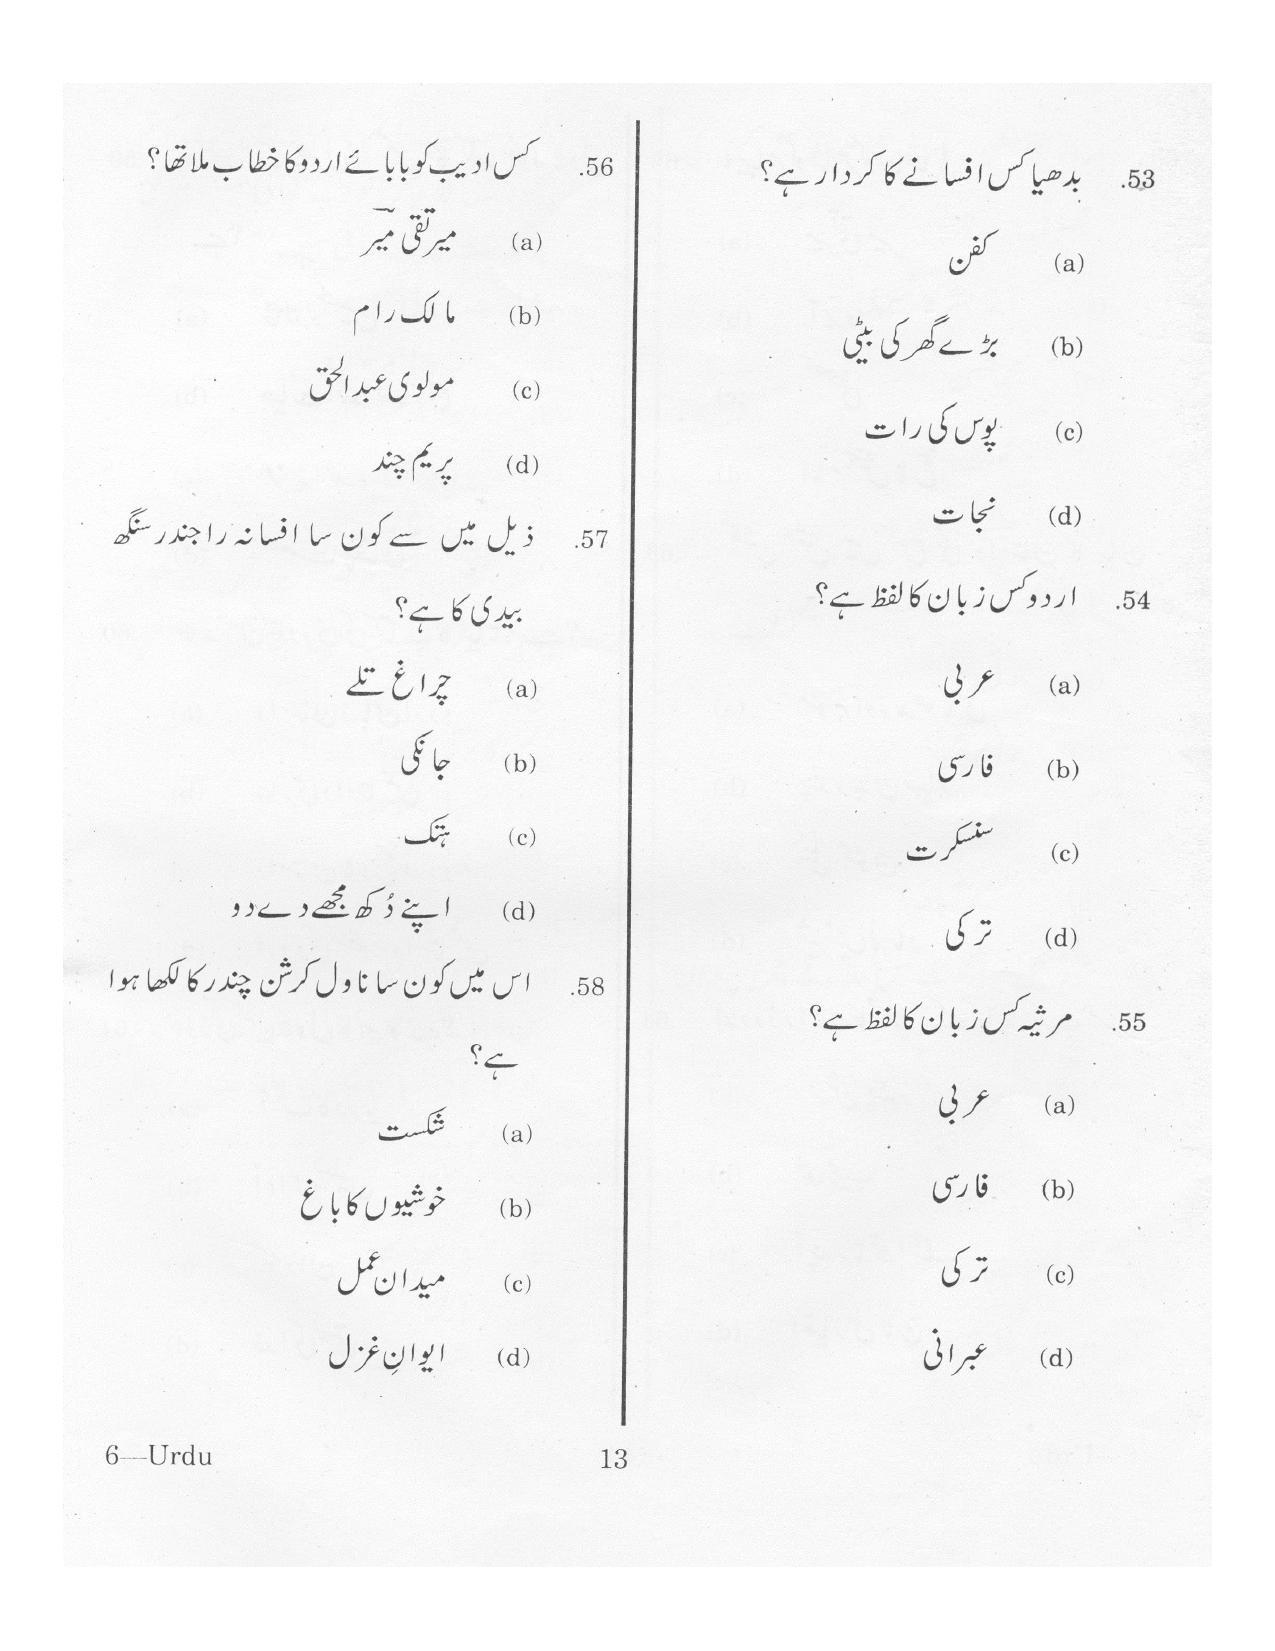 URATPG Urdu 2013 Question Paper - Page 12